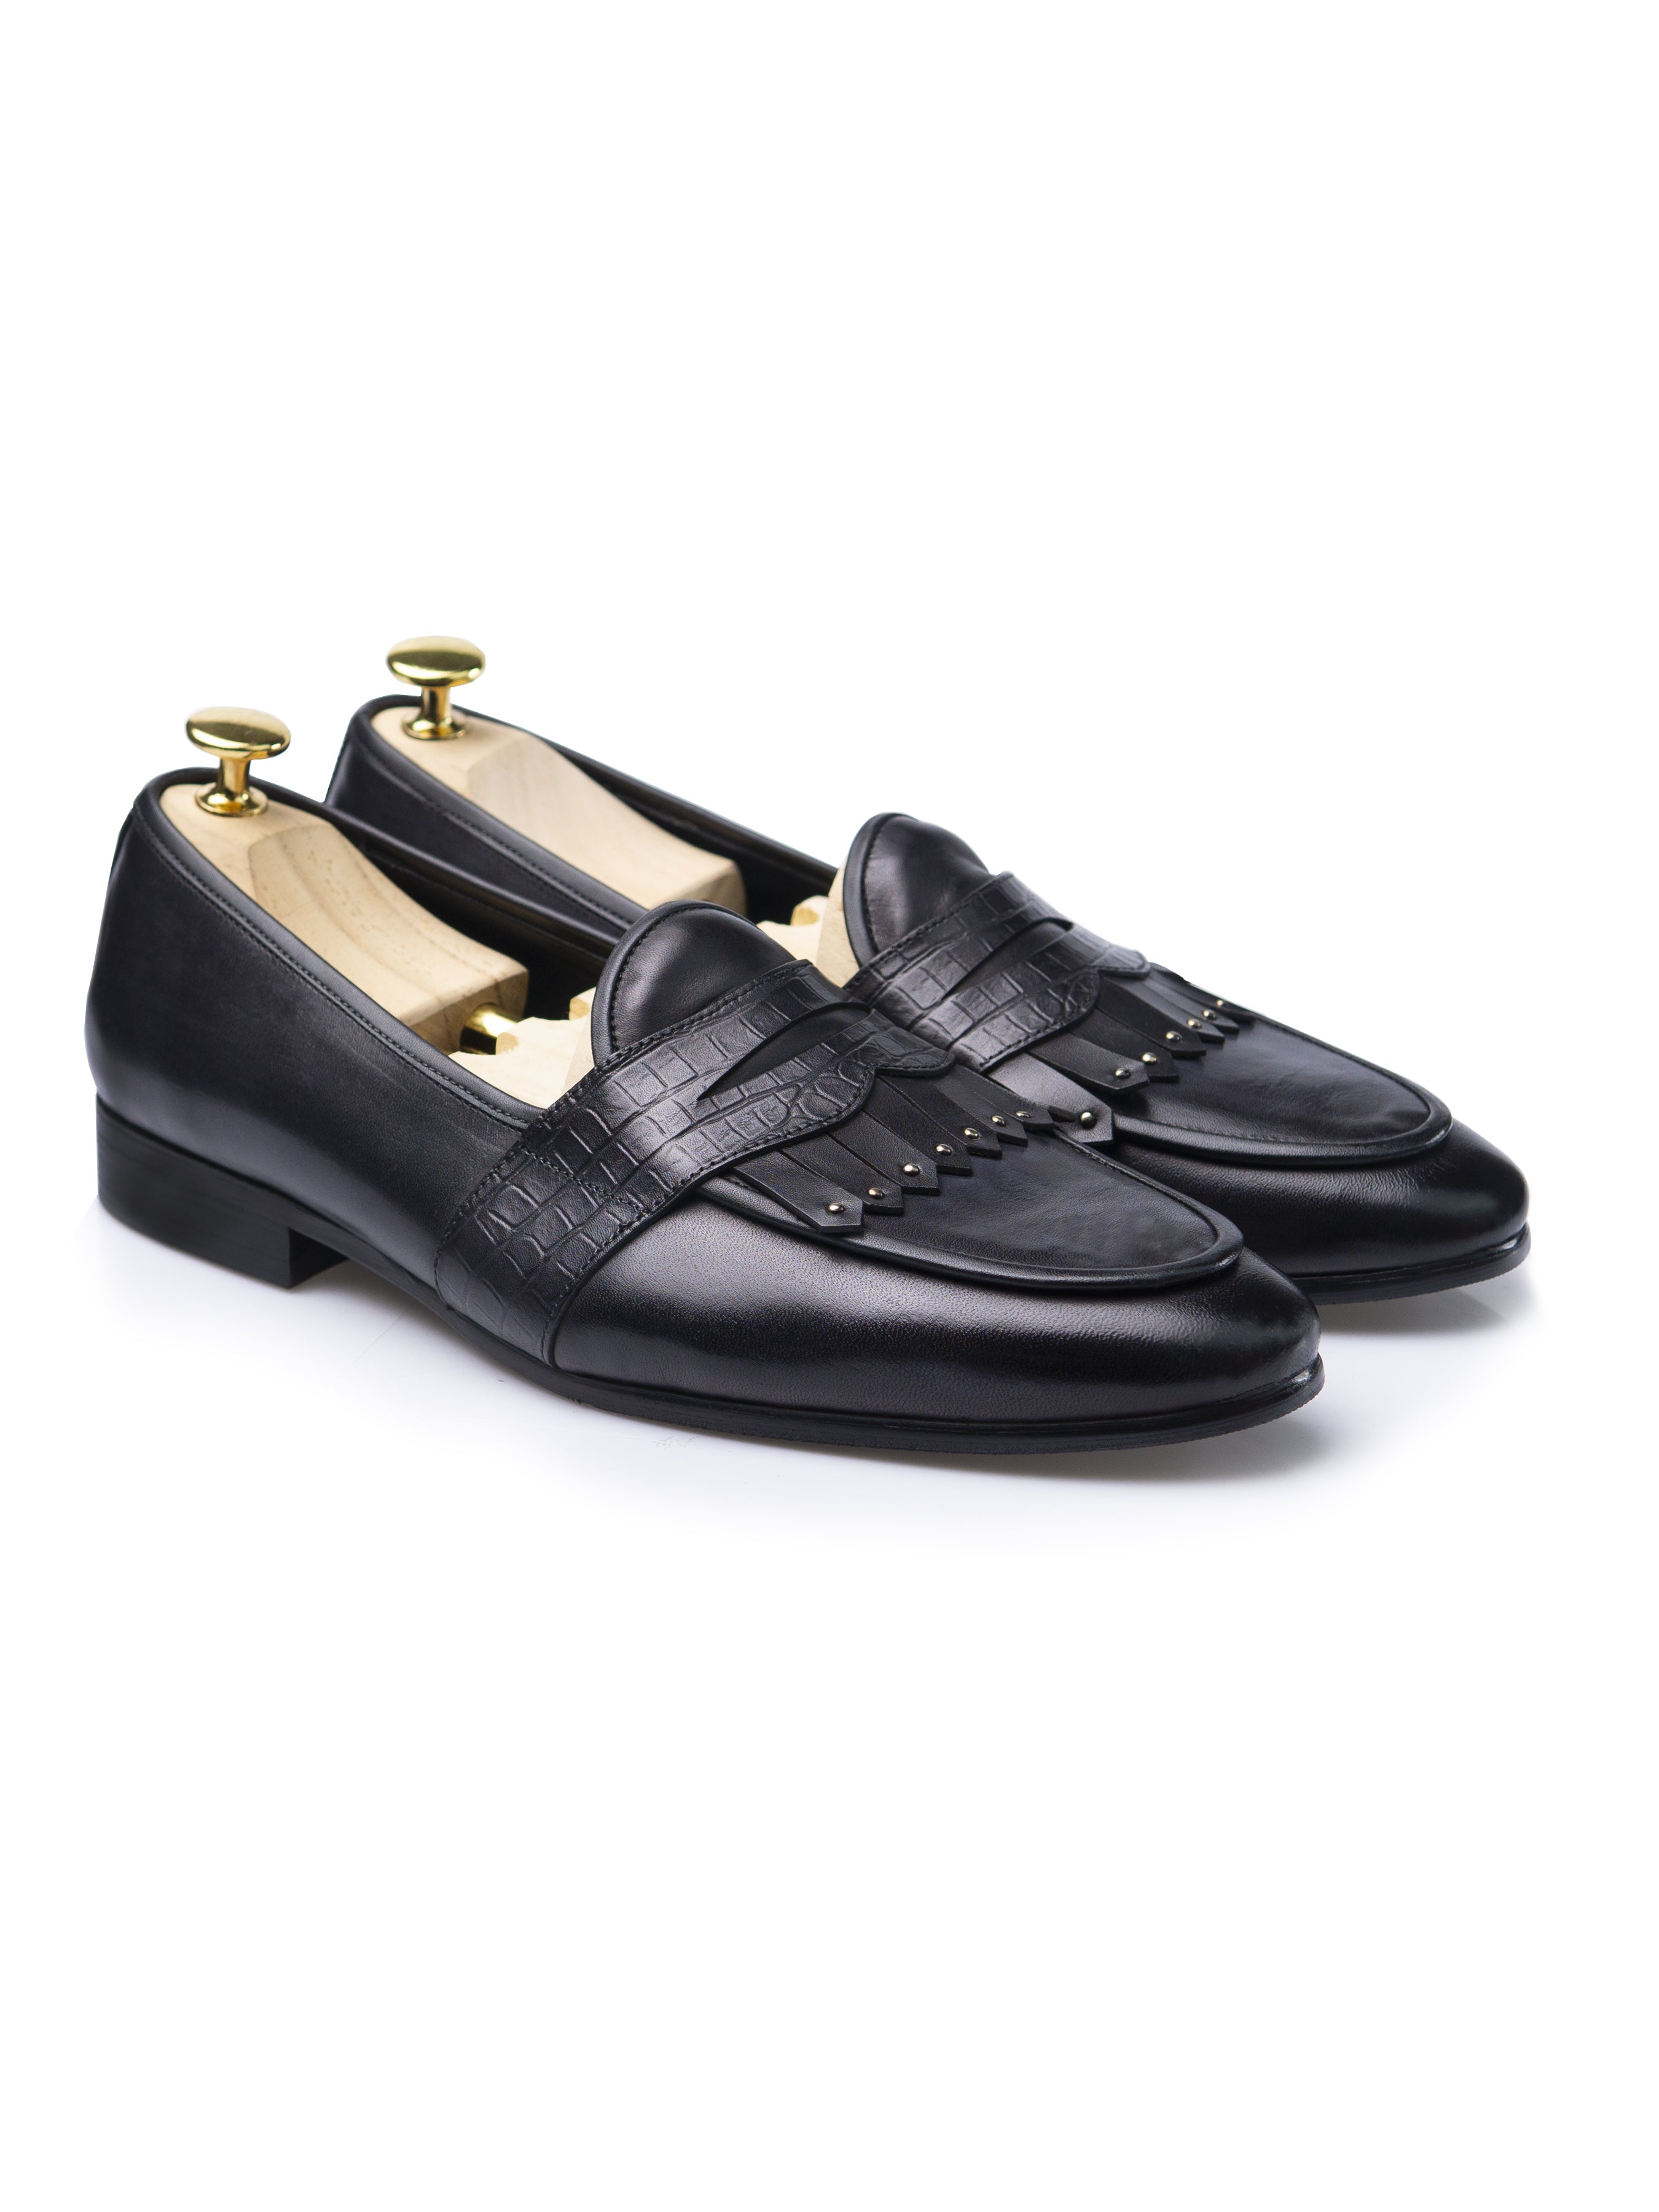 Belgian Loafer - Black Grey Phyton Penny Strap with Studded Fringe (Hand Painted Patina) - Zeve Shoes